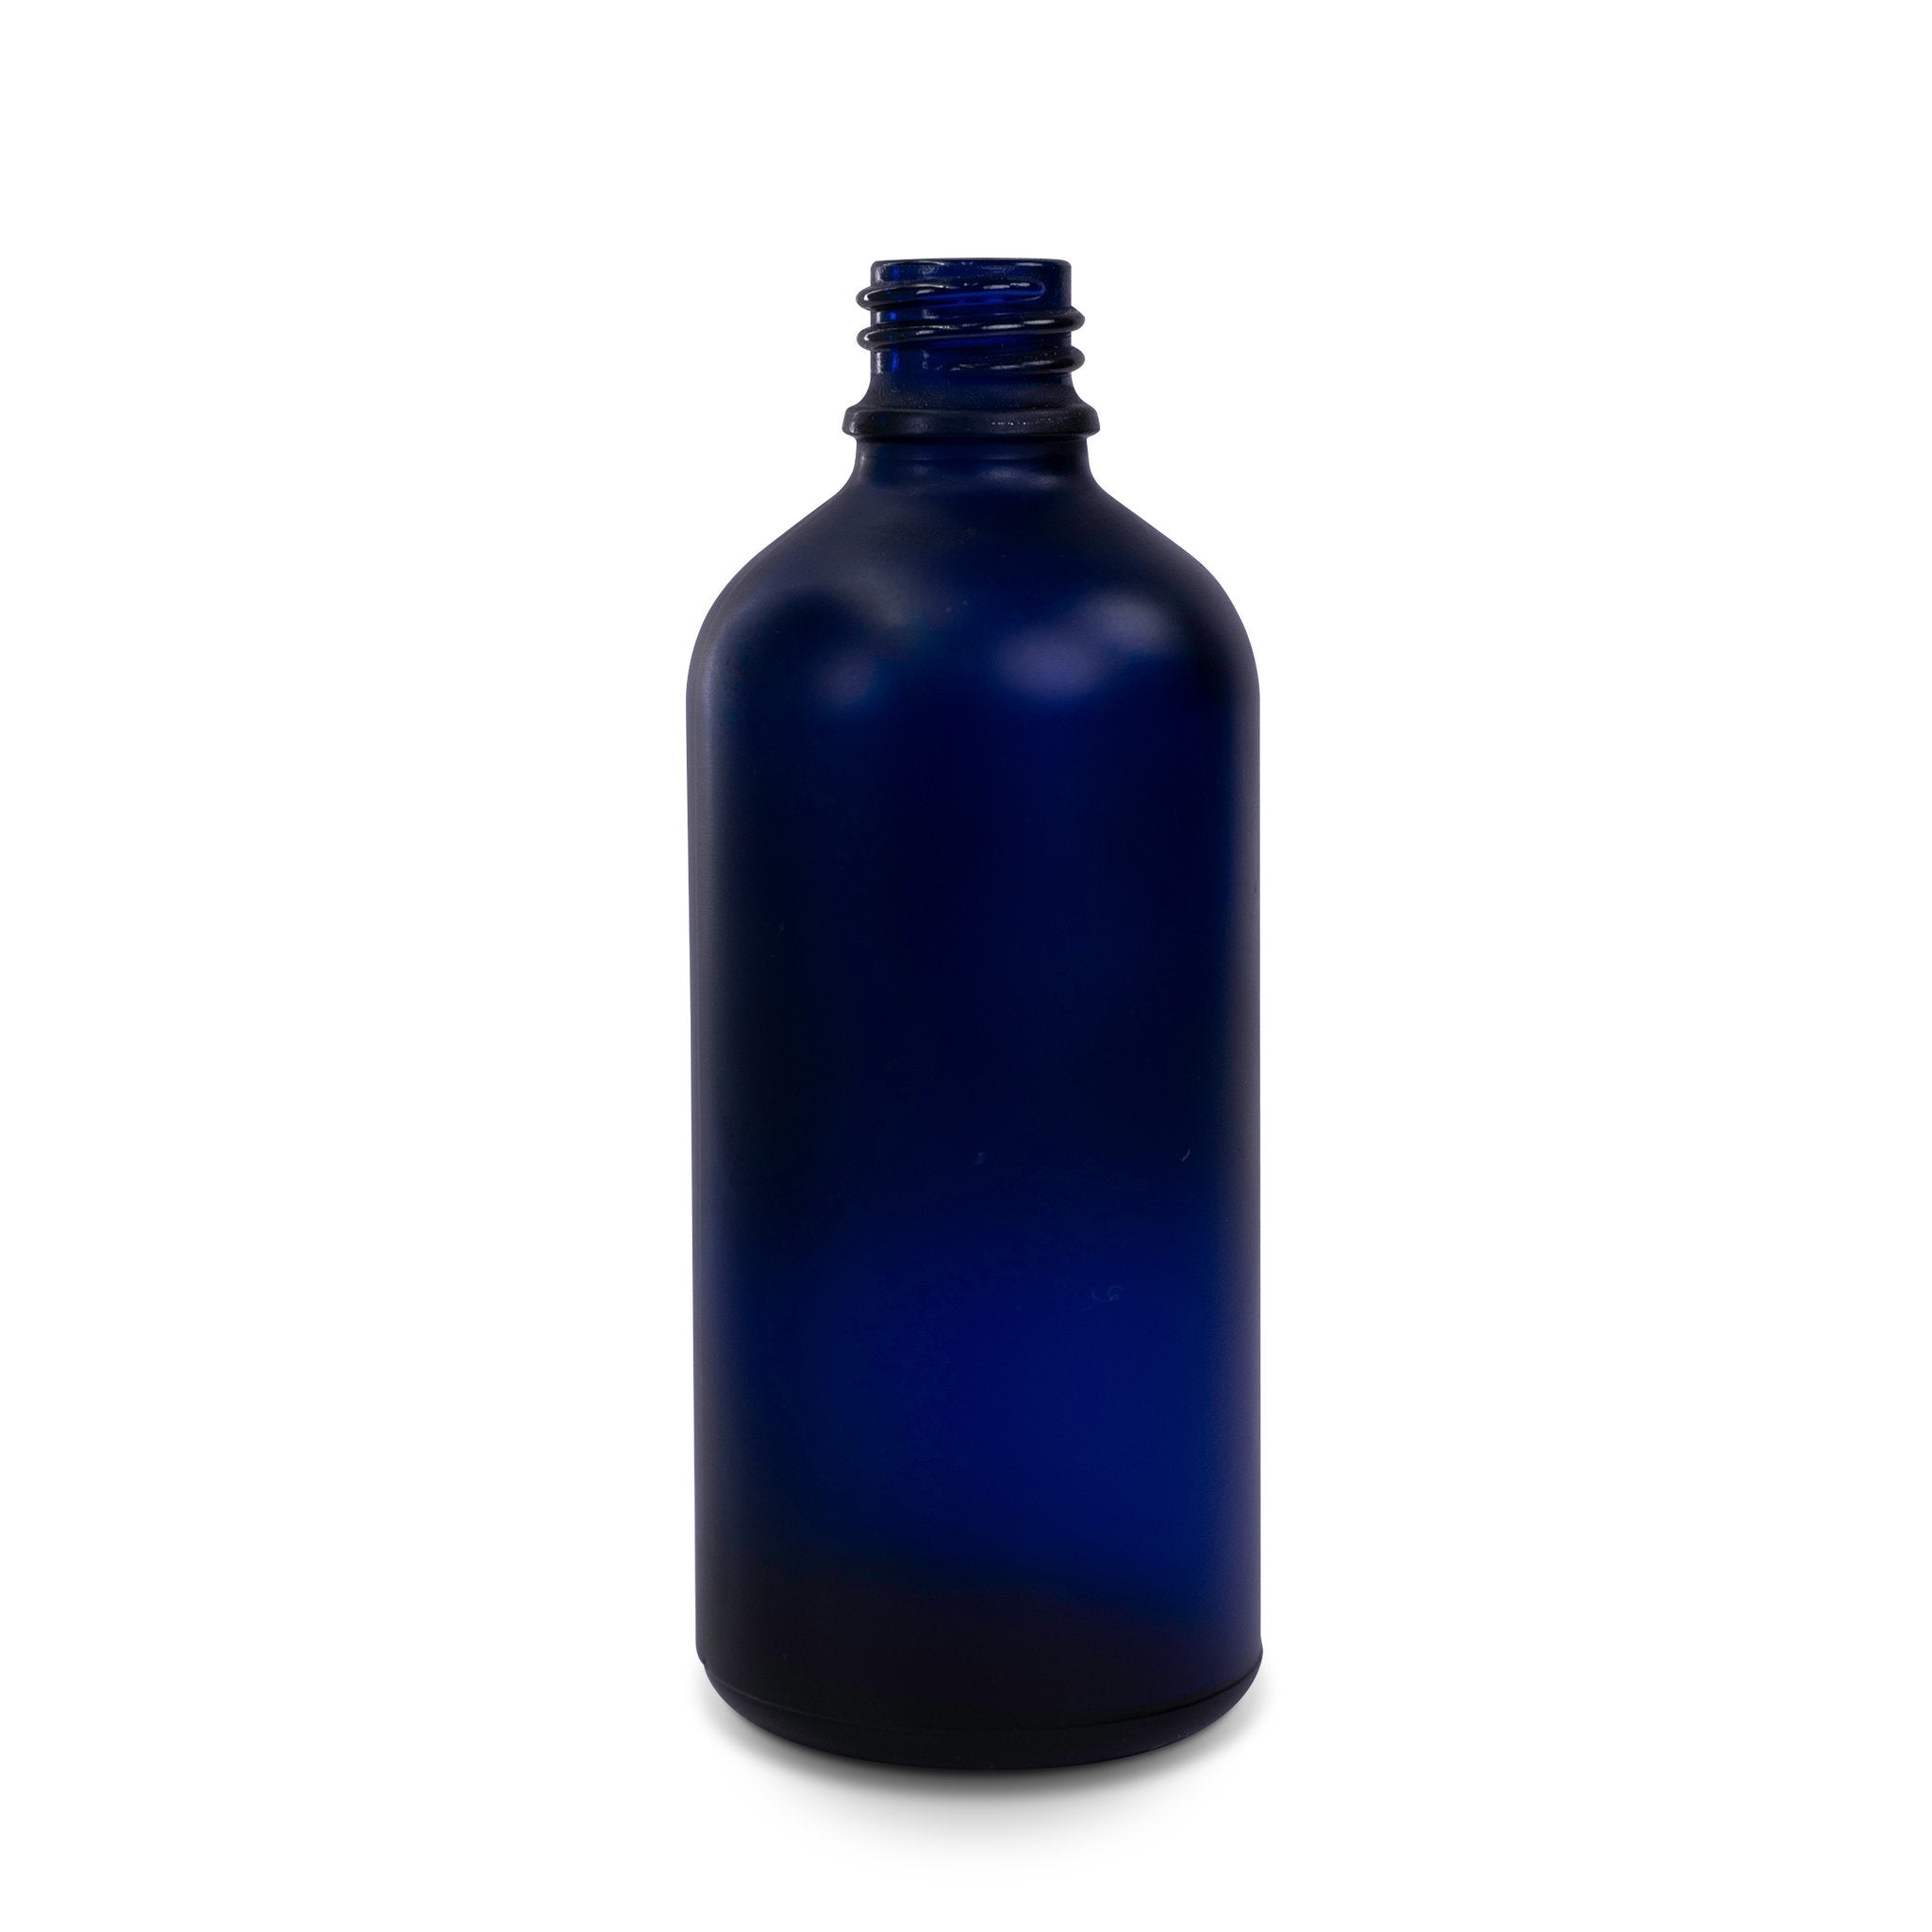 Diffuser glass bottle